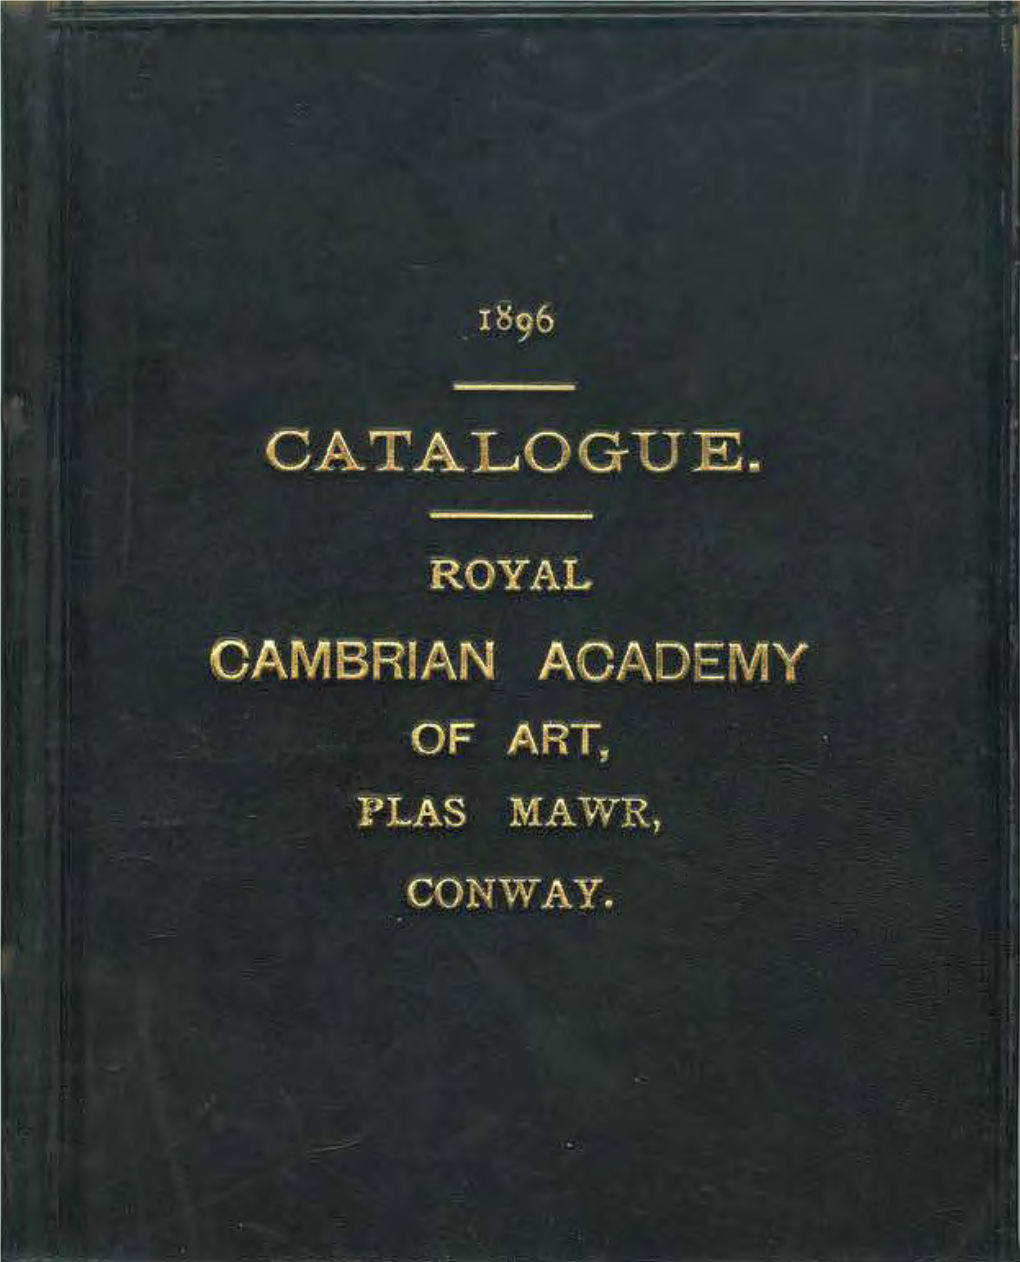 1896 Exhibition Catalogue Pdf, 3.9 MB